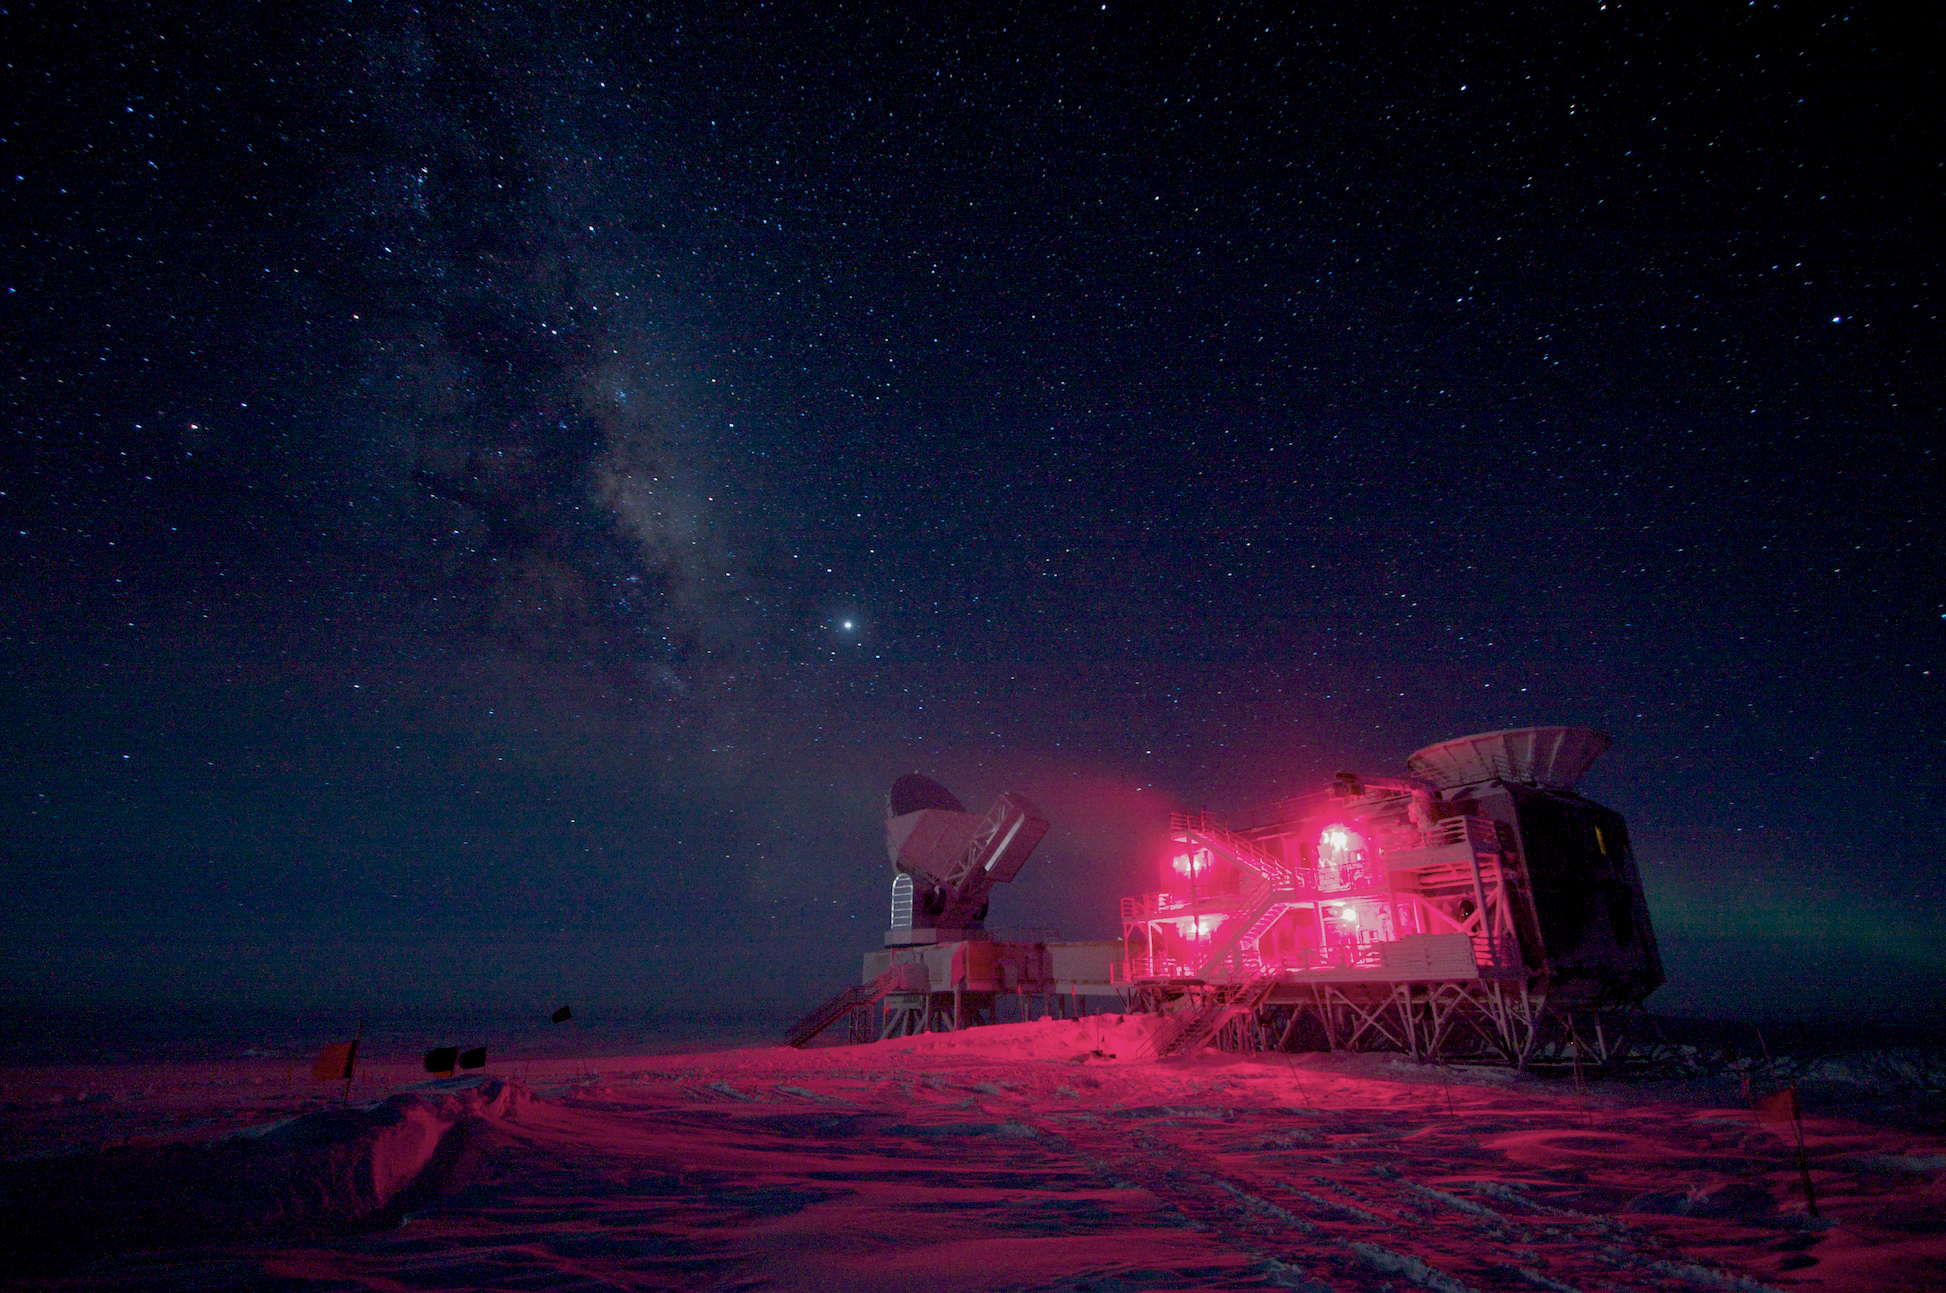 The South Pole Telescope